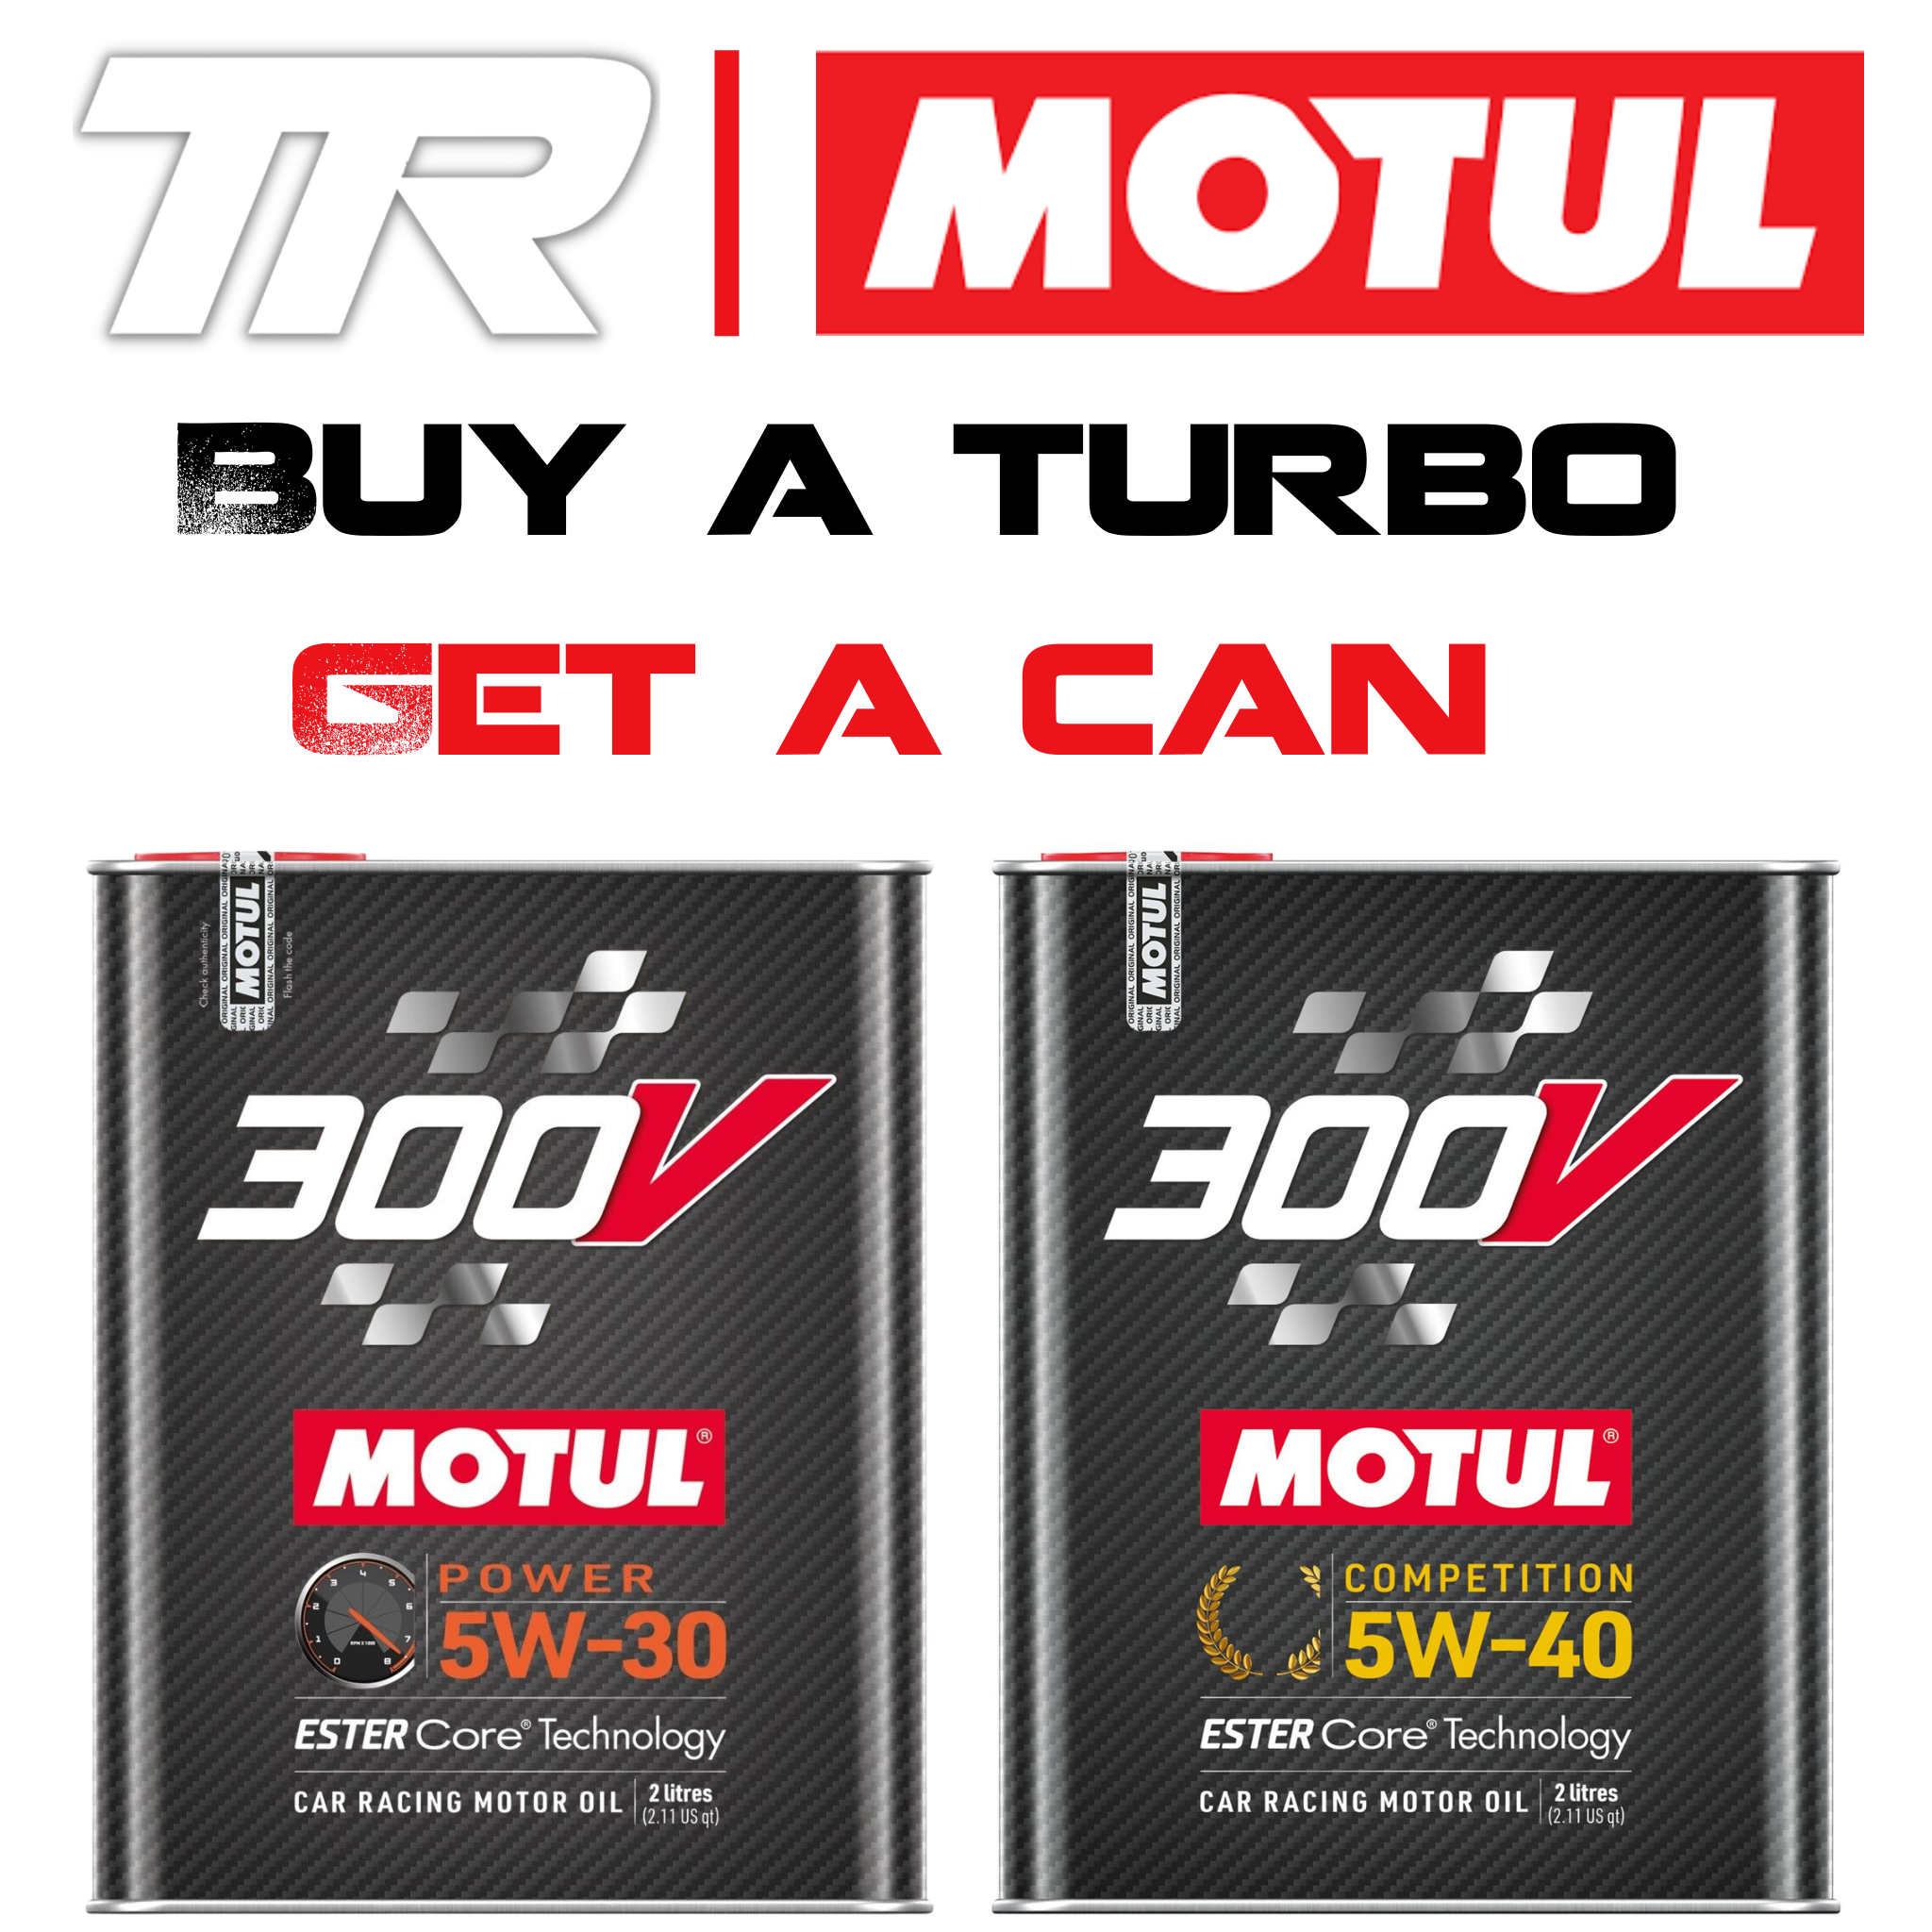 Tomioka Racing Collaborates with Motul to Offer Unbeatable Turbo Sale